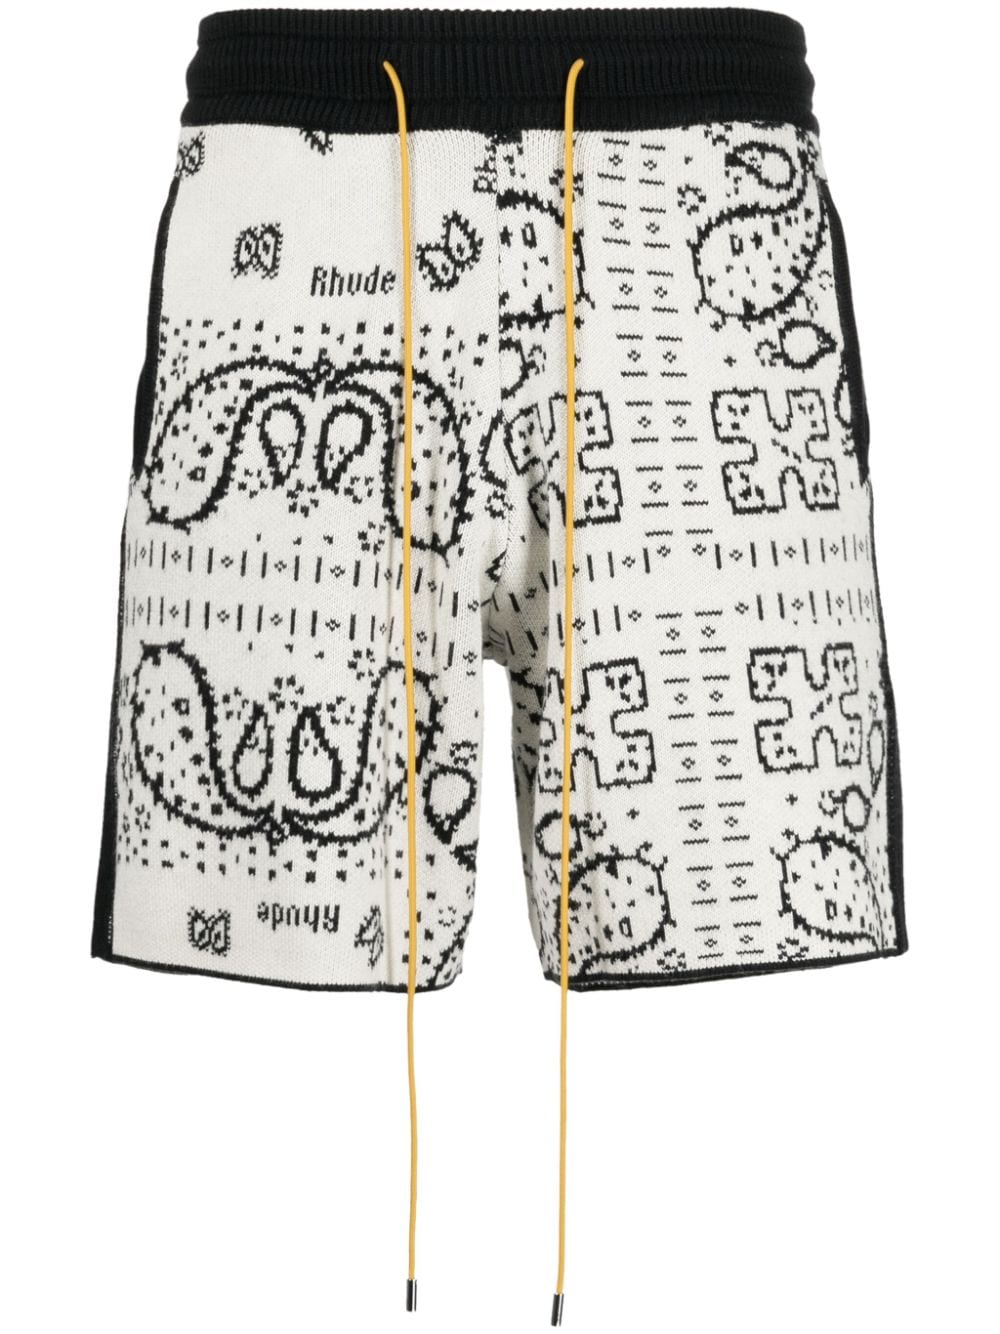 RHUDE Banco knitted shorts - Black von RHUDE